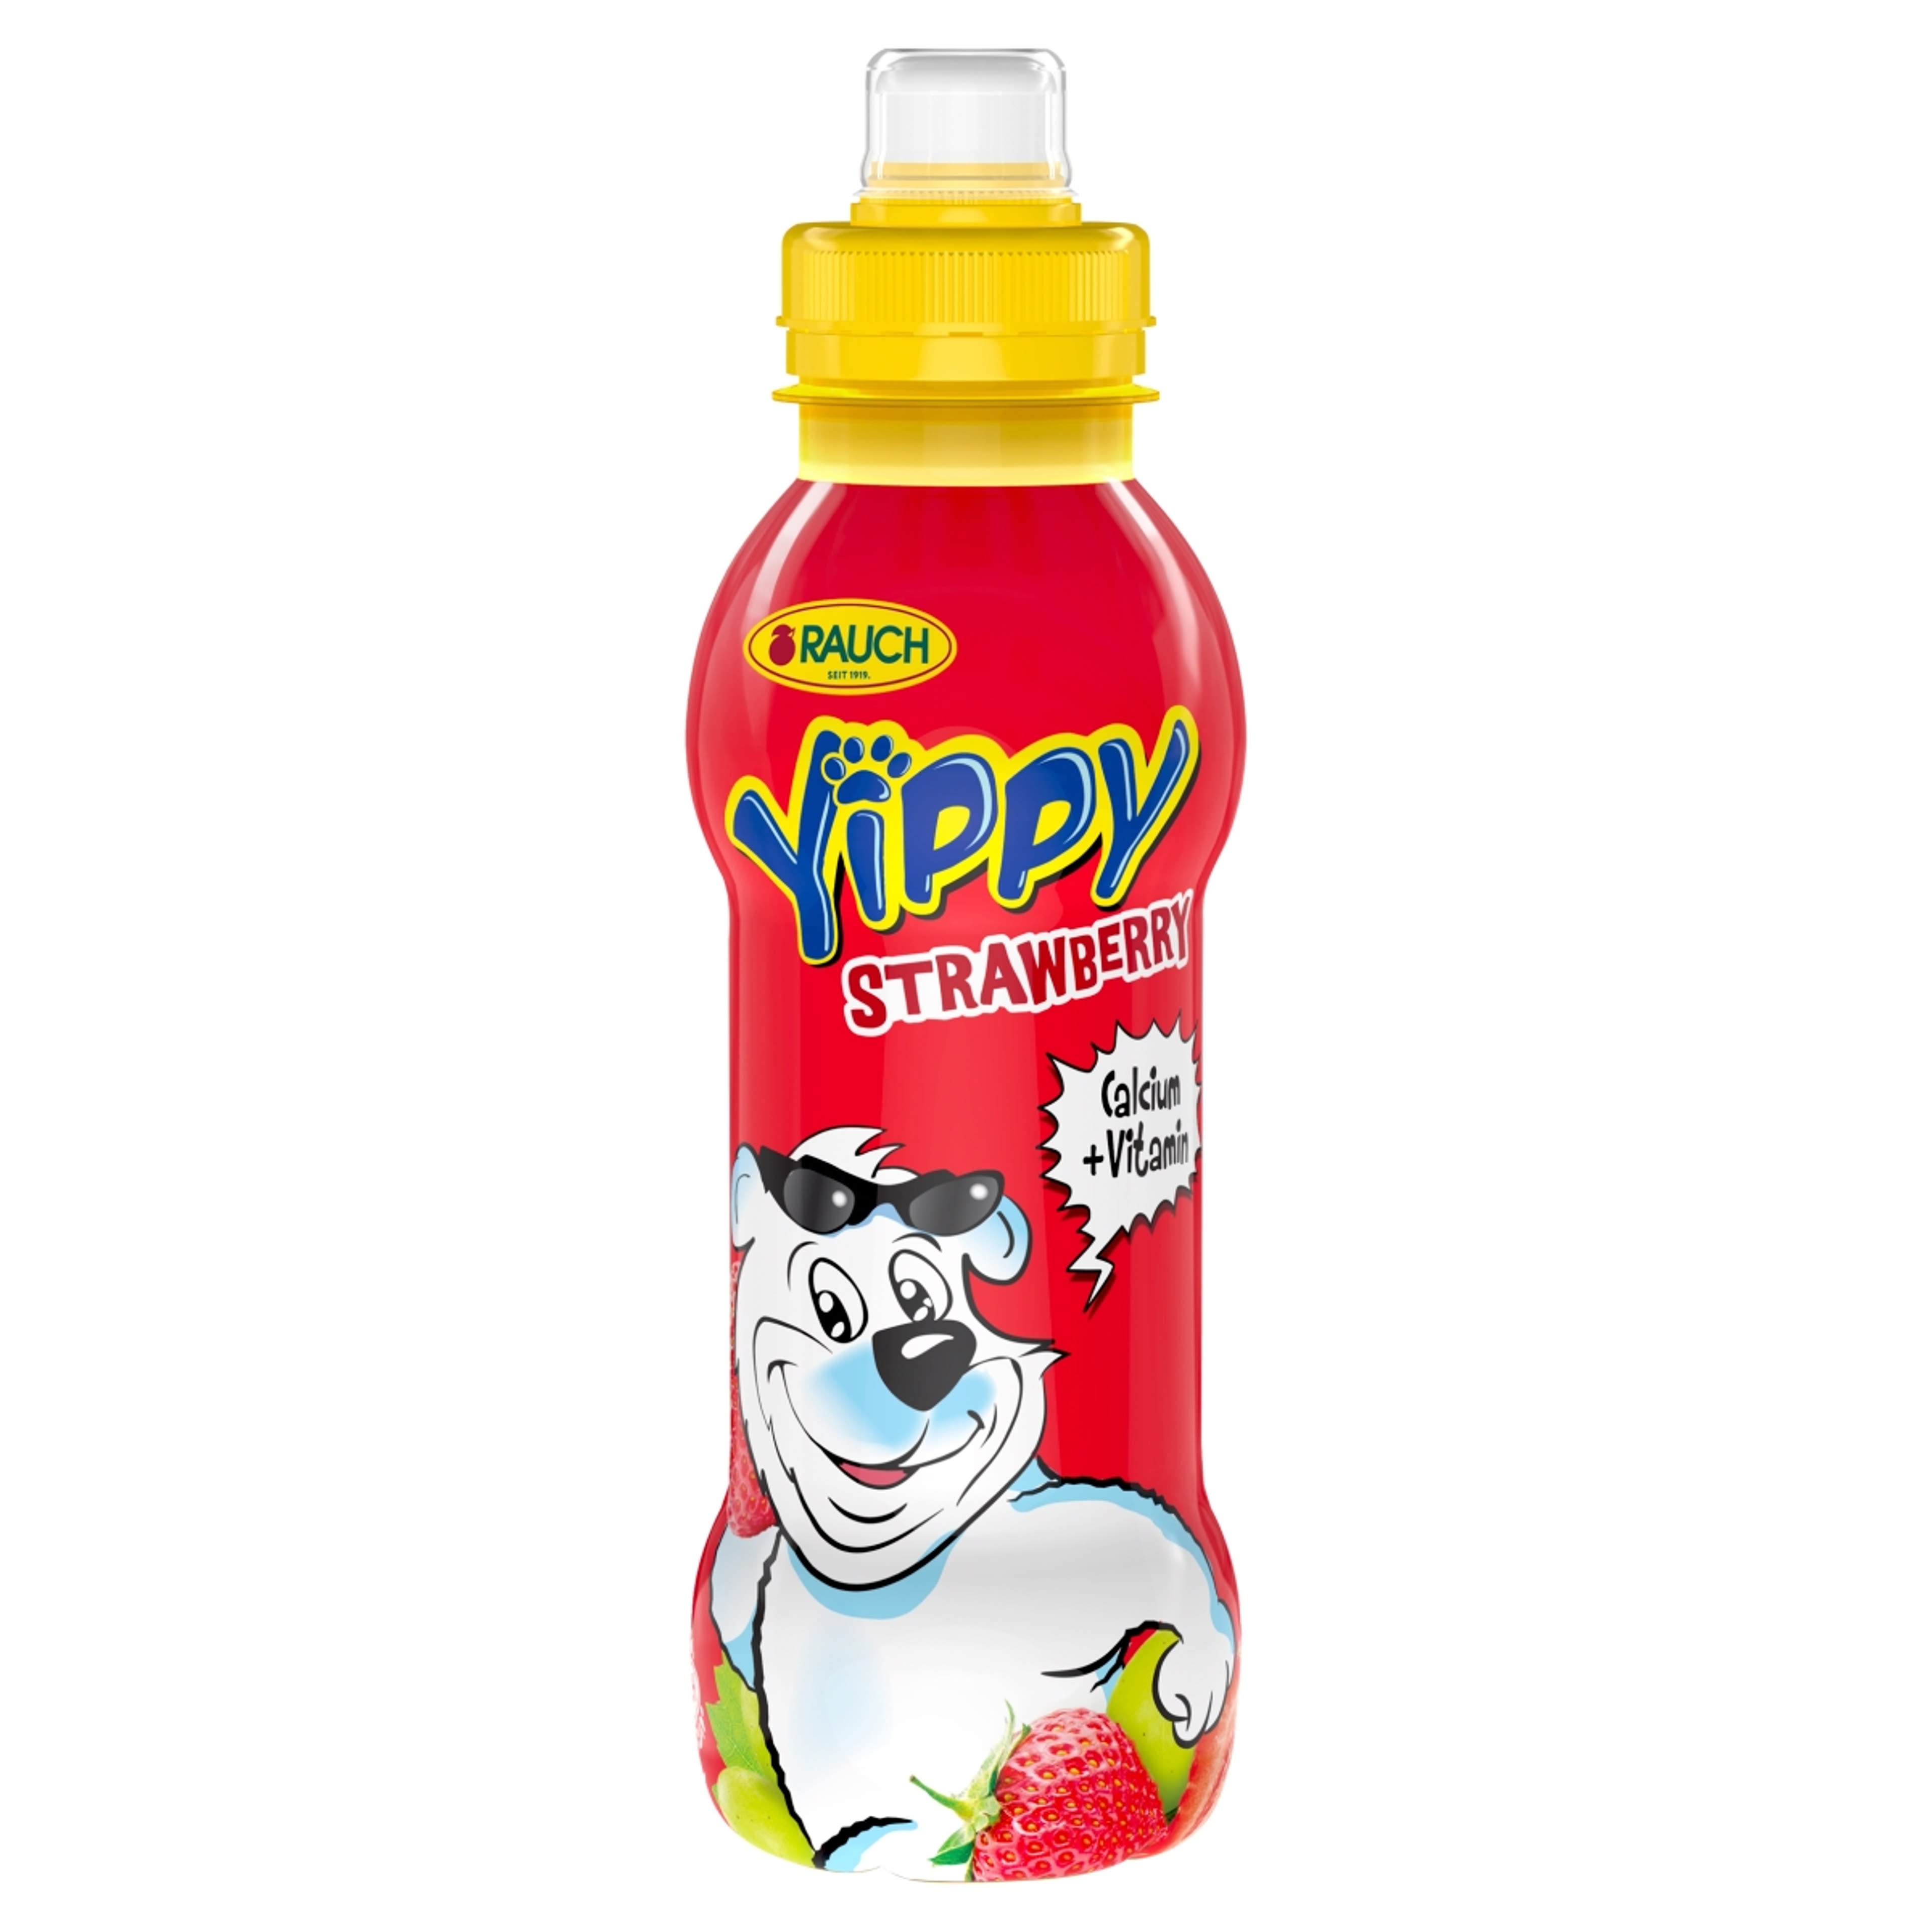 Yippy strawberry - 330 ml-1